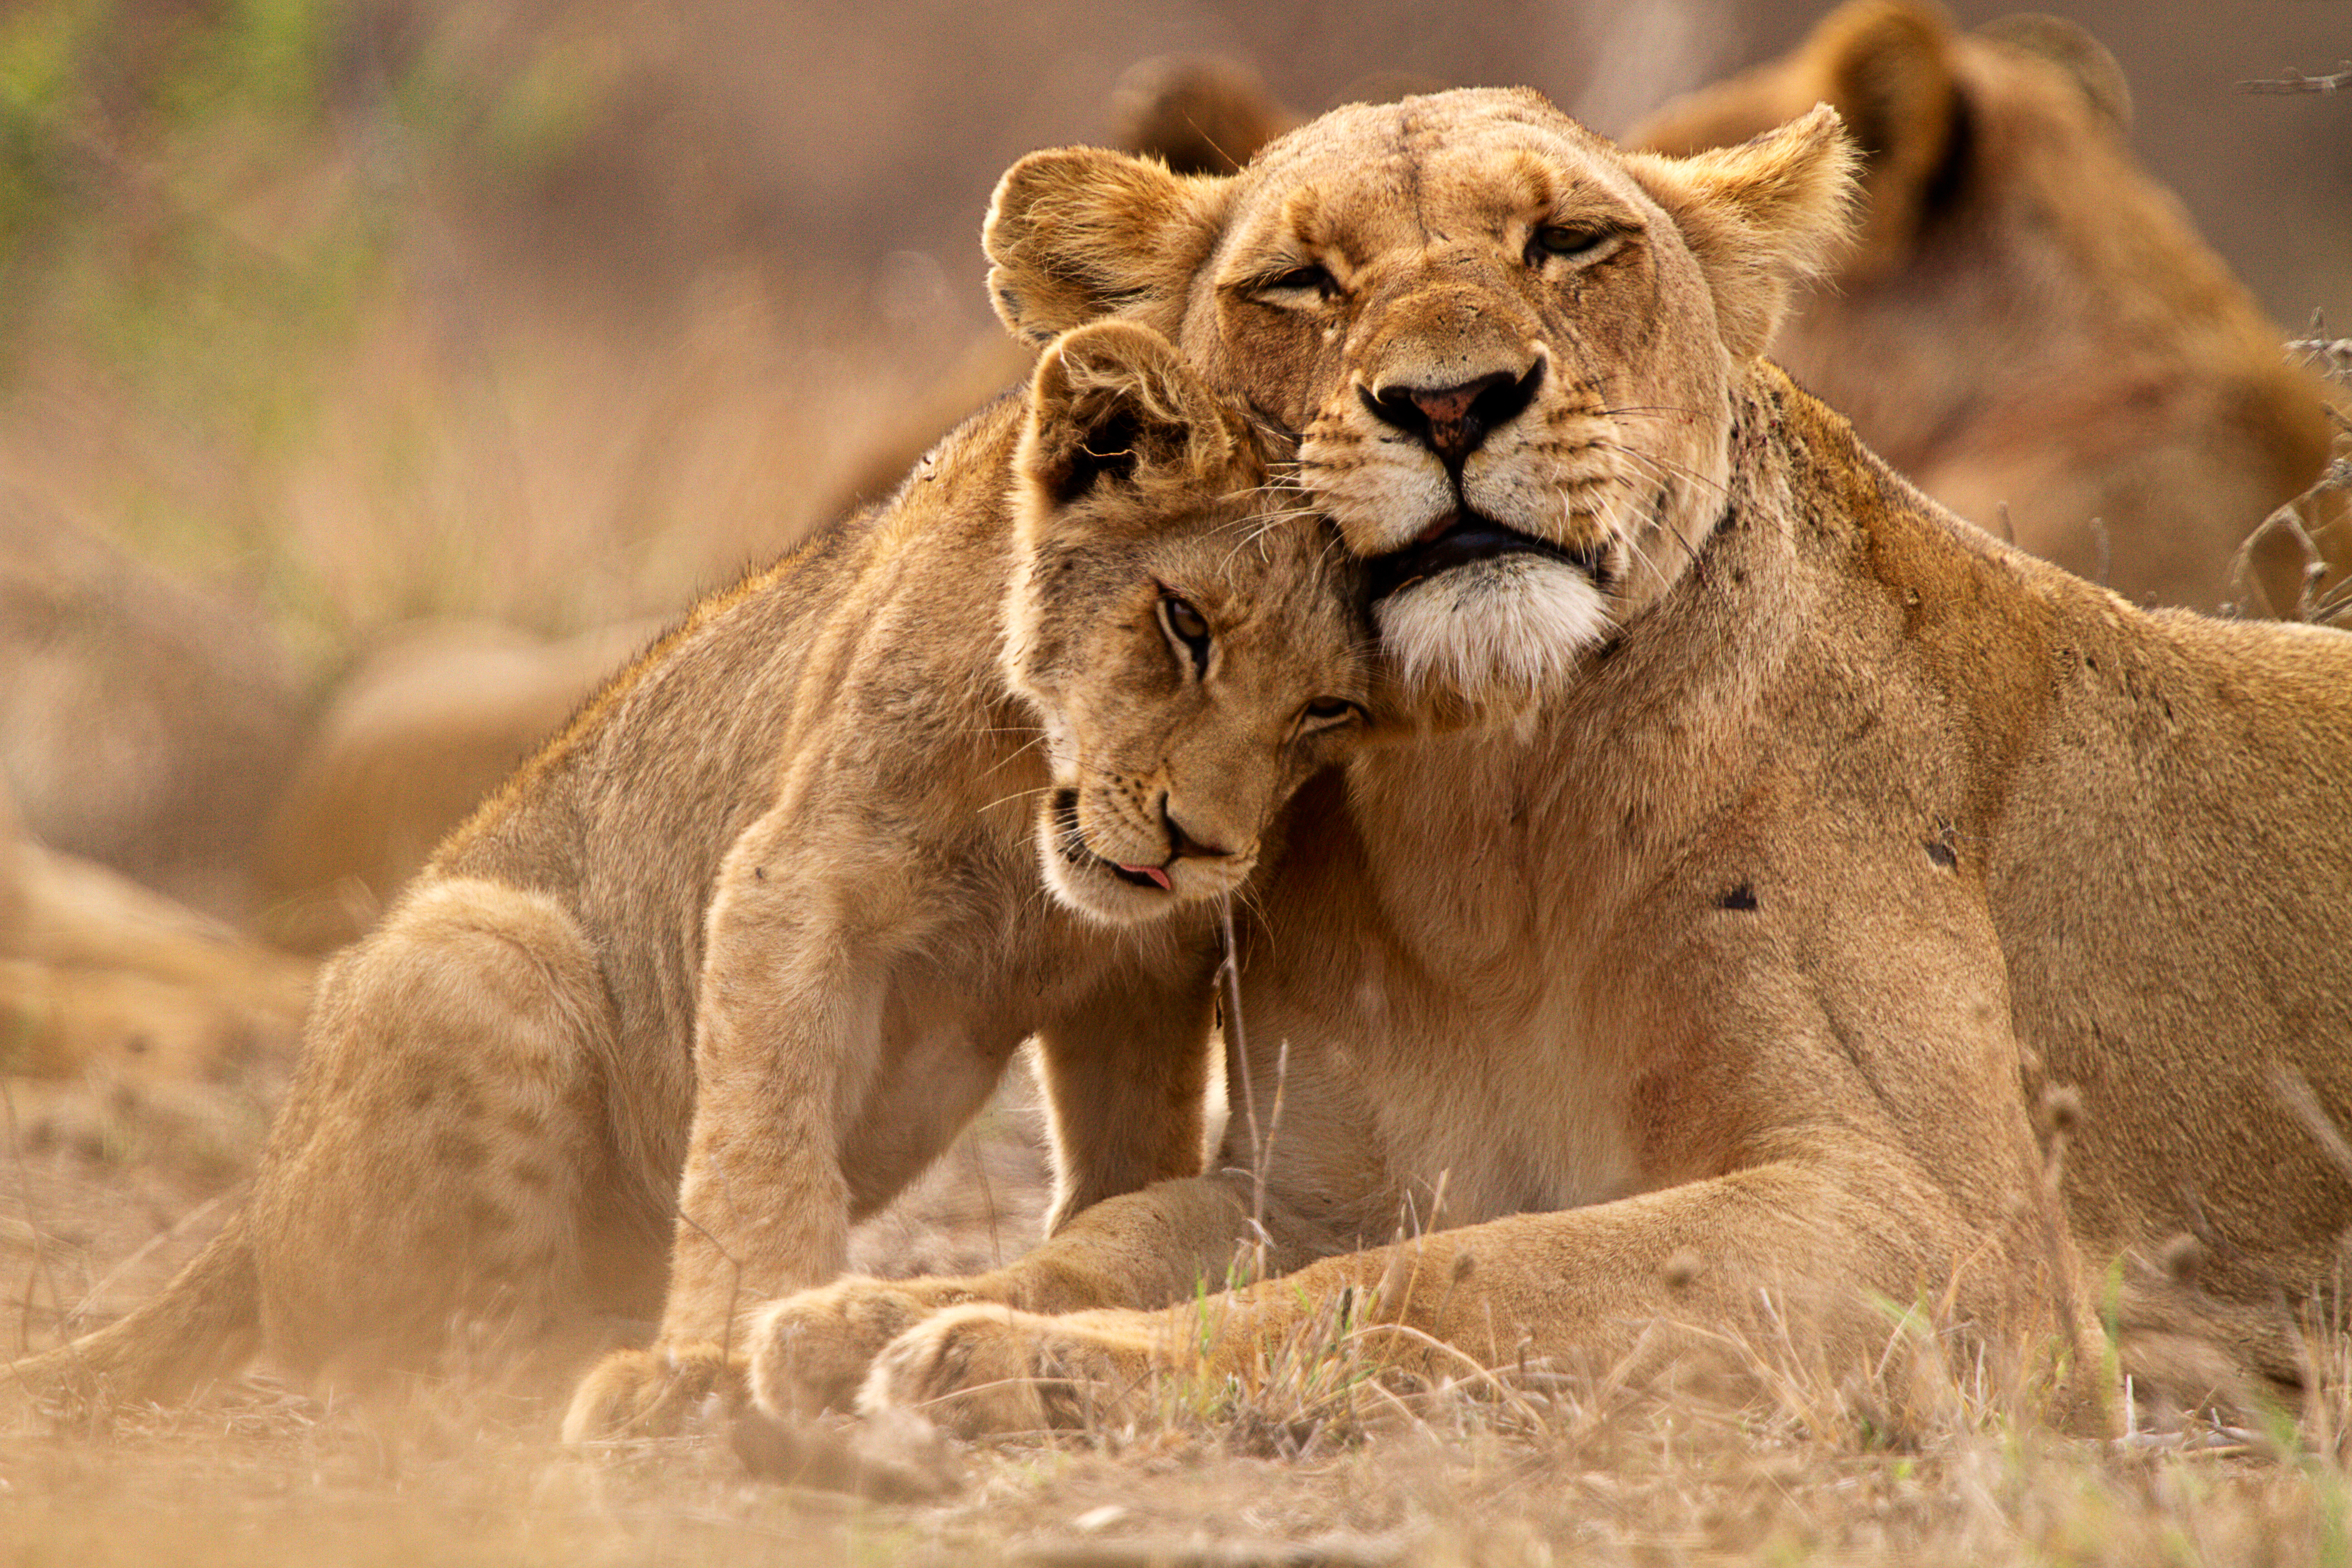 Lions on safari